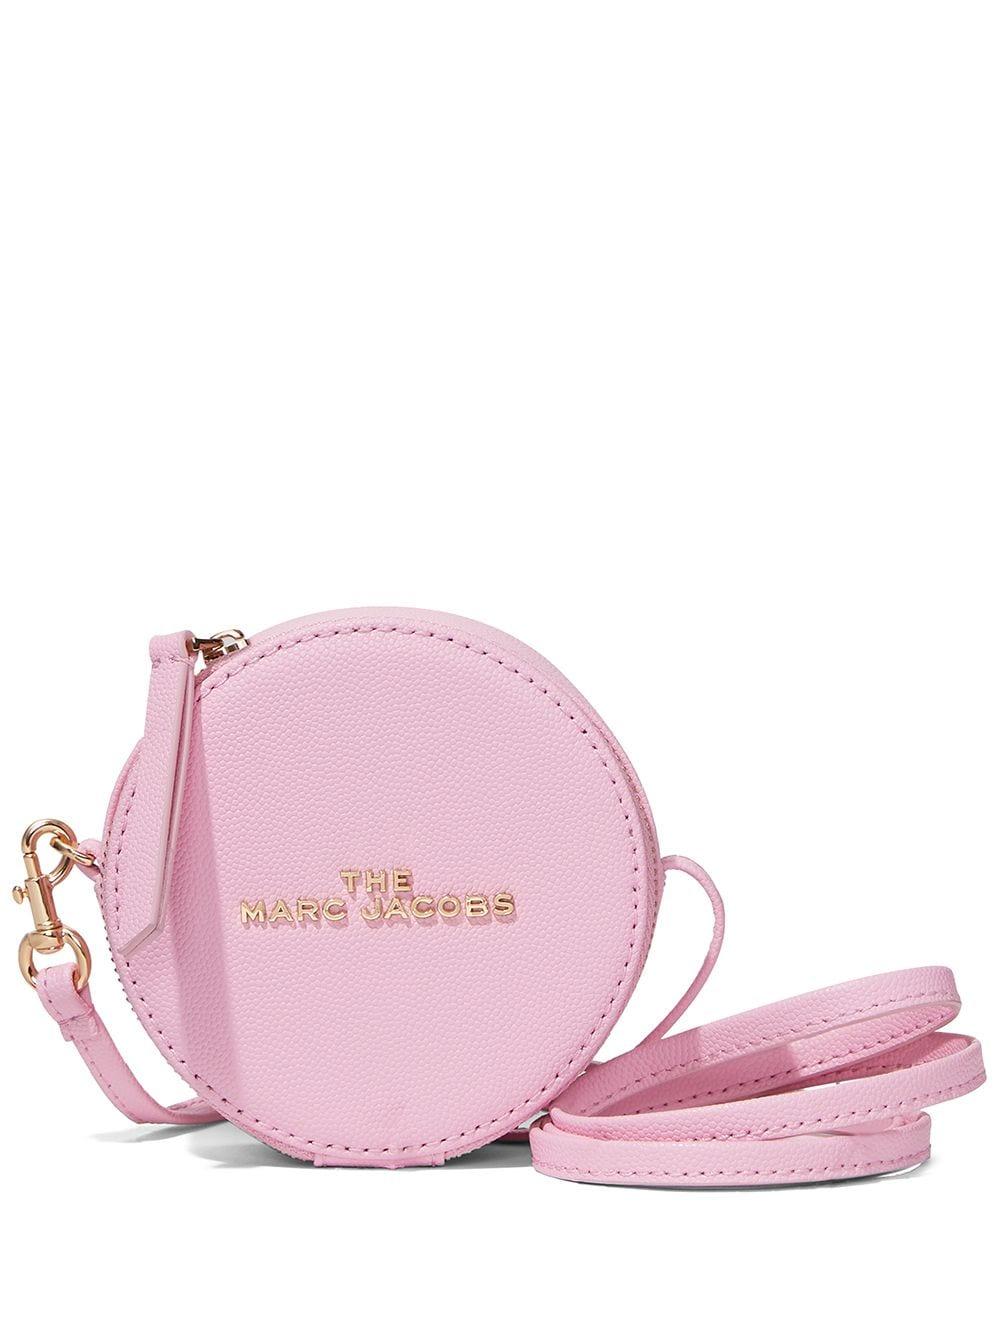 Marc Jacobs Medium Hot Spot Bag in Pink | Lyst